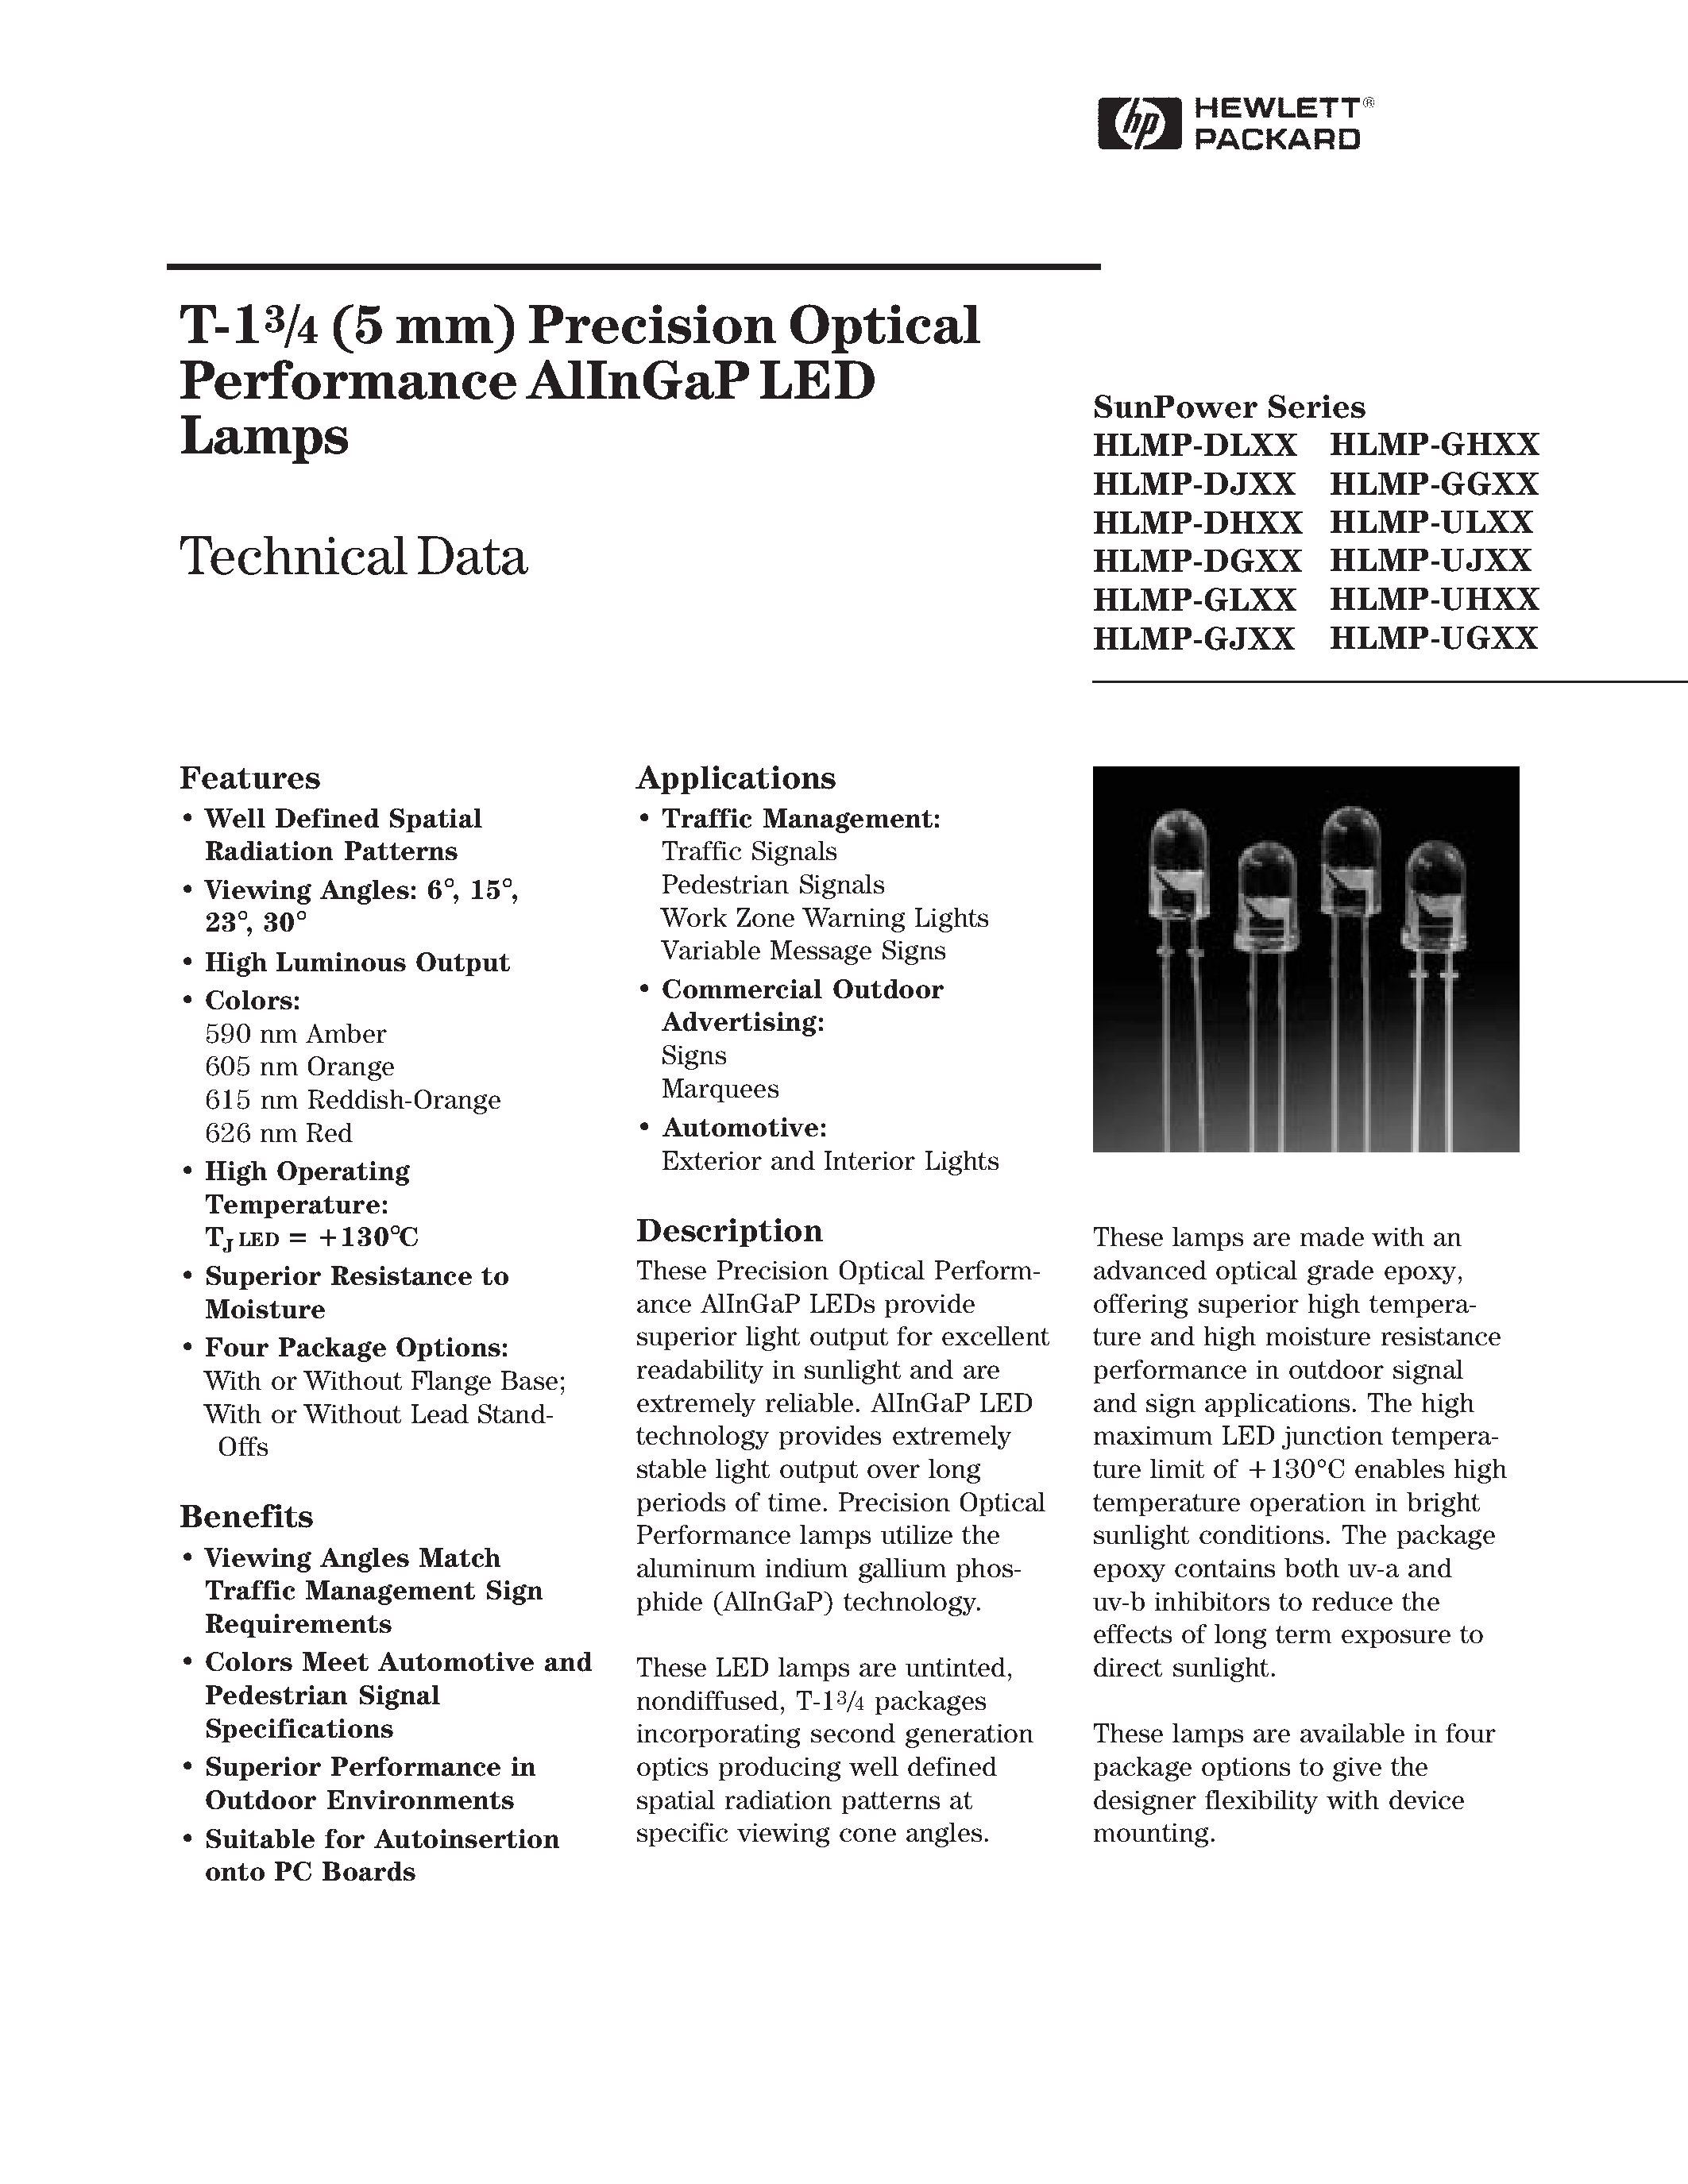 Datasheet HLMP-UL14 - T-13/4 (5 mm) Precision Optical Performance AlInGaP LED Lamps page 1